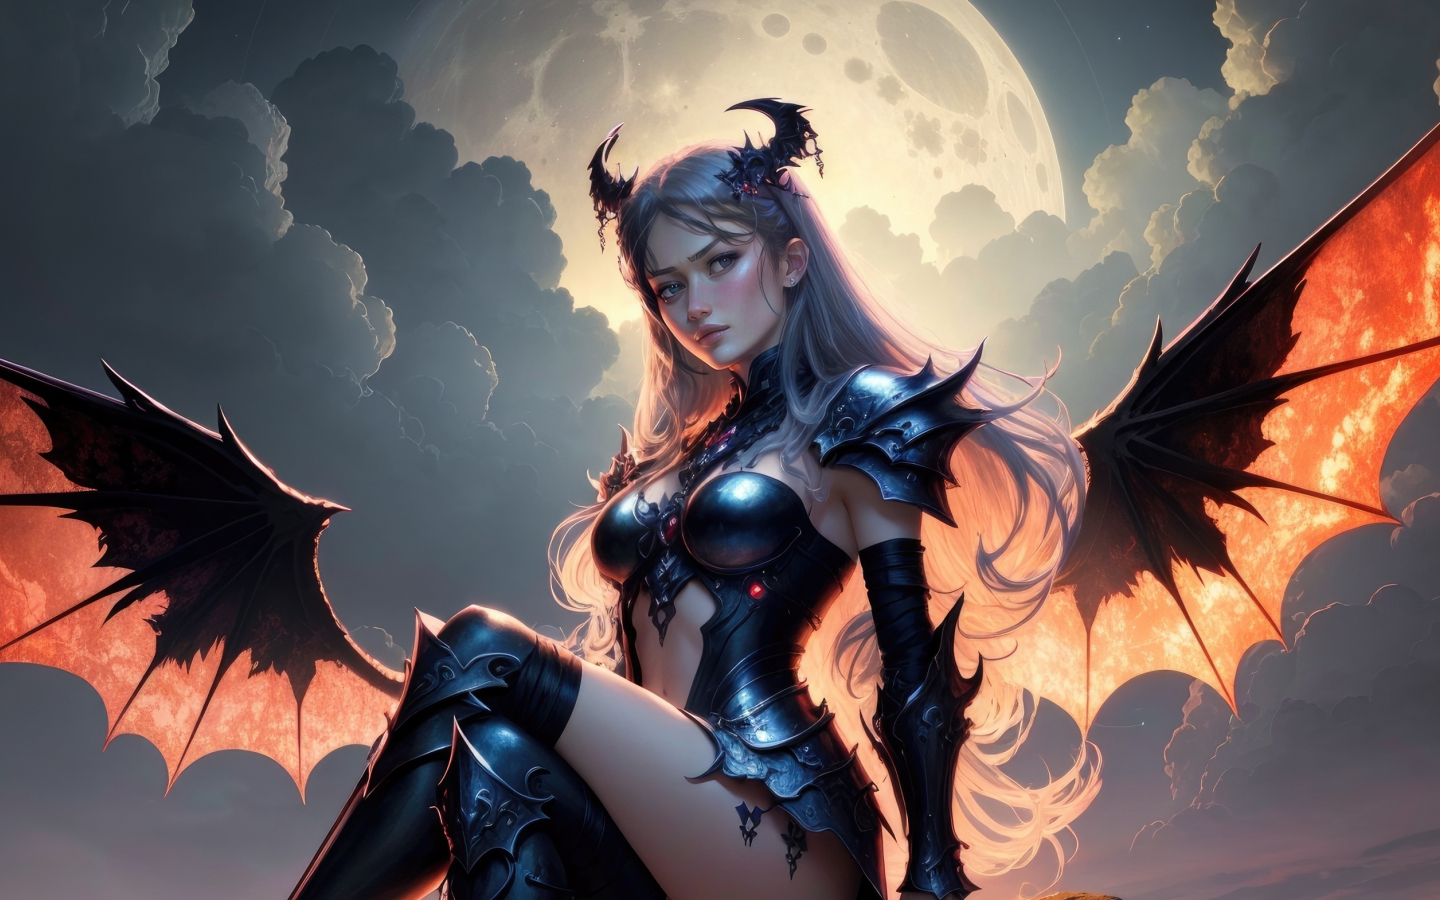 Evil Girl with wings, beautiful angel, art, 1440x900 wallpaper